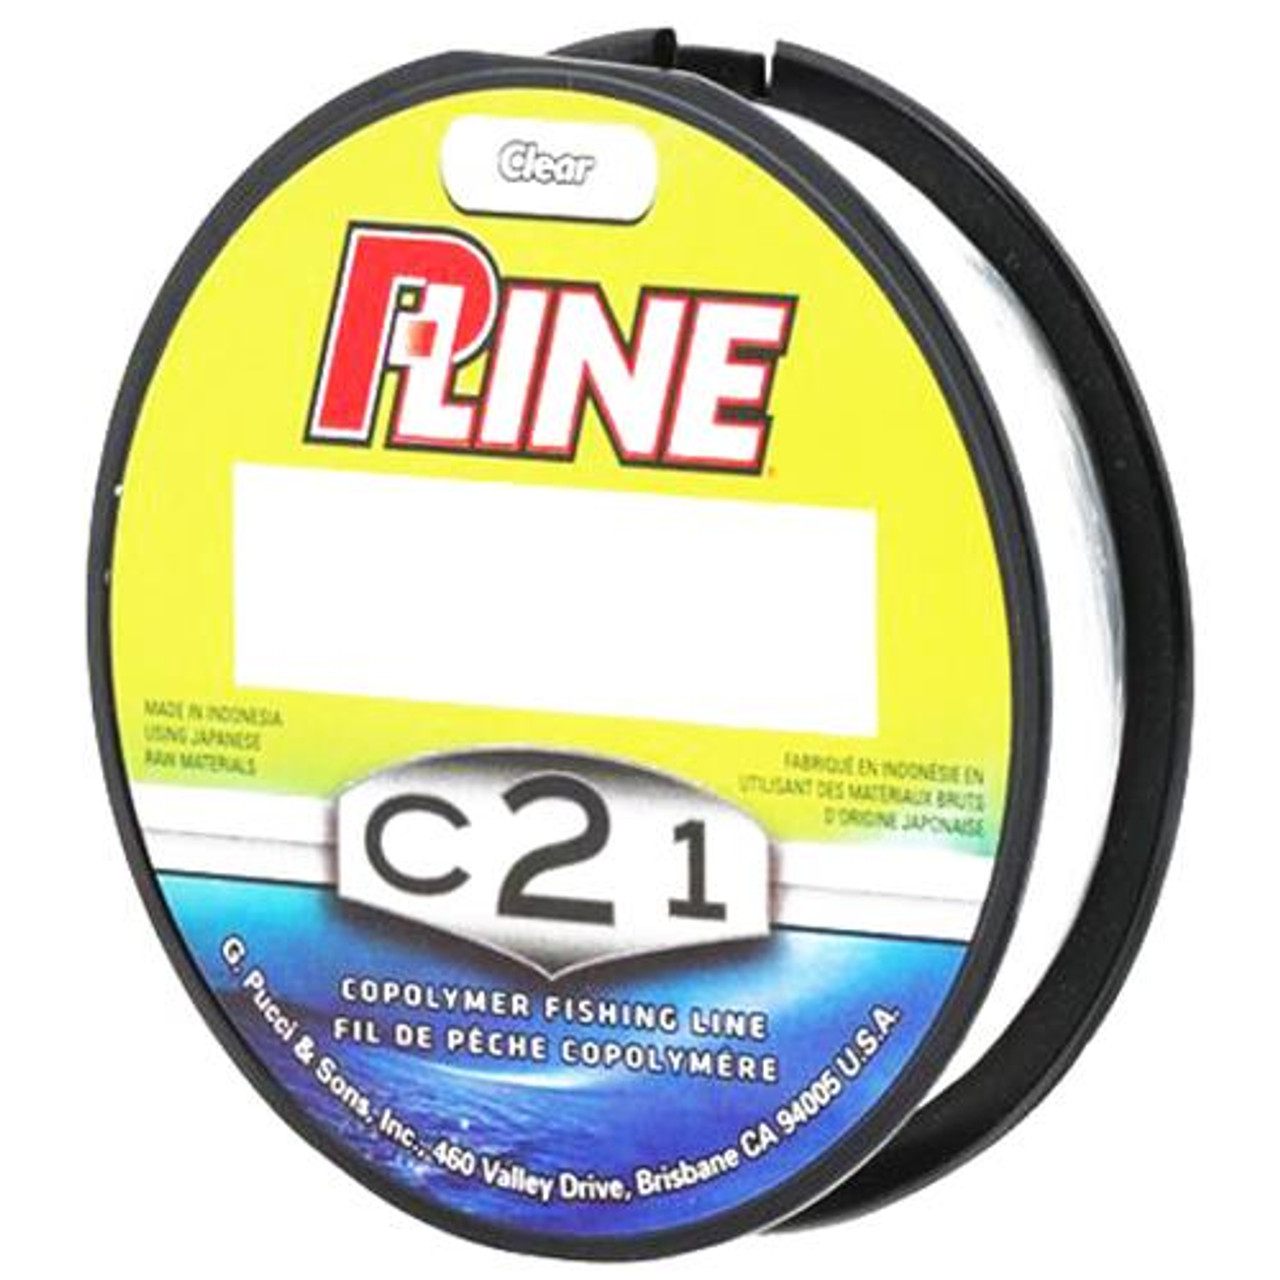 P-Line C21 Co-Polymer